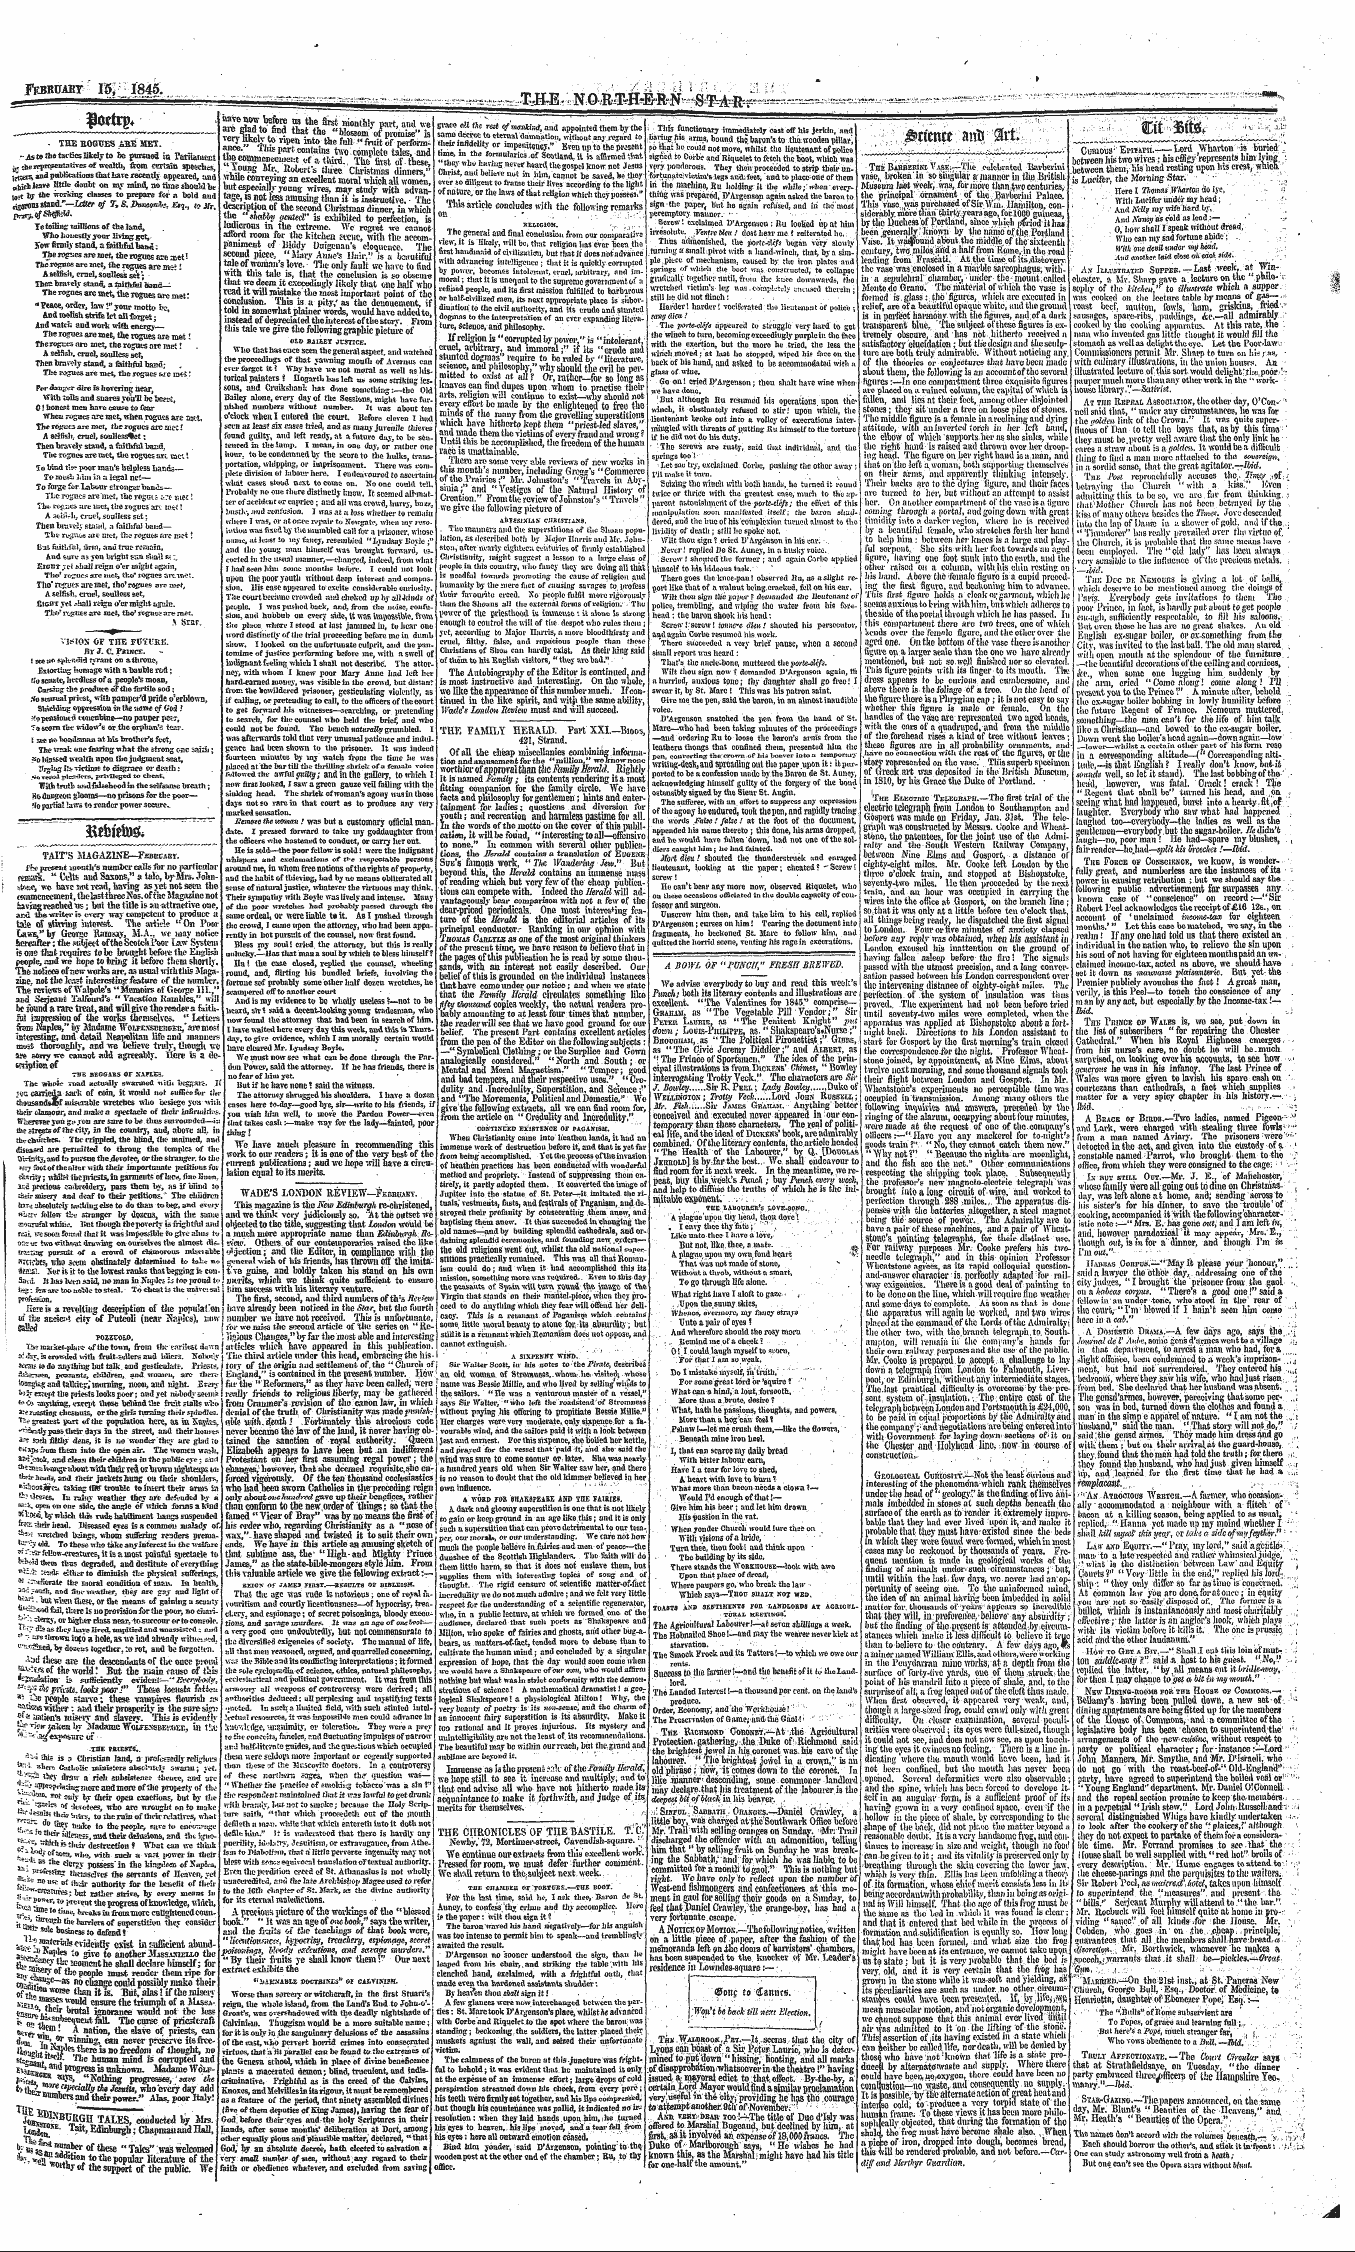 Northern Star (1837-1852): jS F Y, 4th edition - Fiiiitntt Ai^( $Rt.